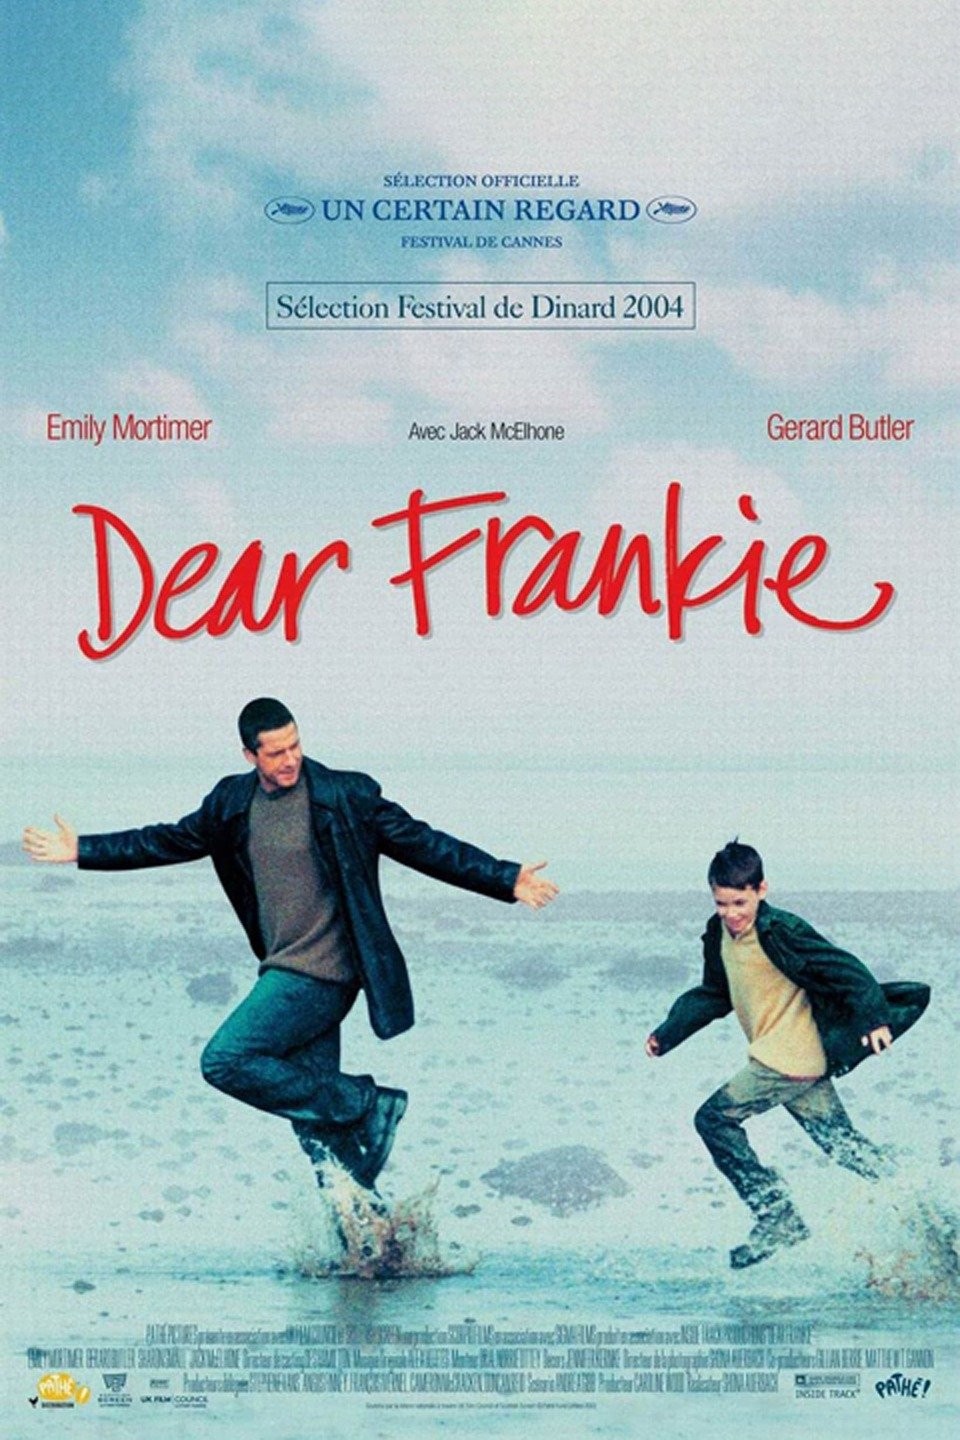  Dear Frankie : Jack McElhone, Emily Mortimer, Gerard